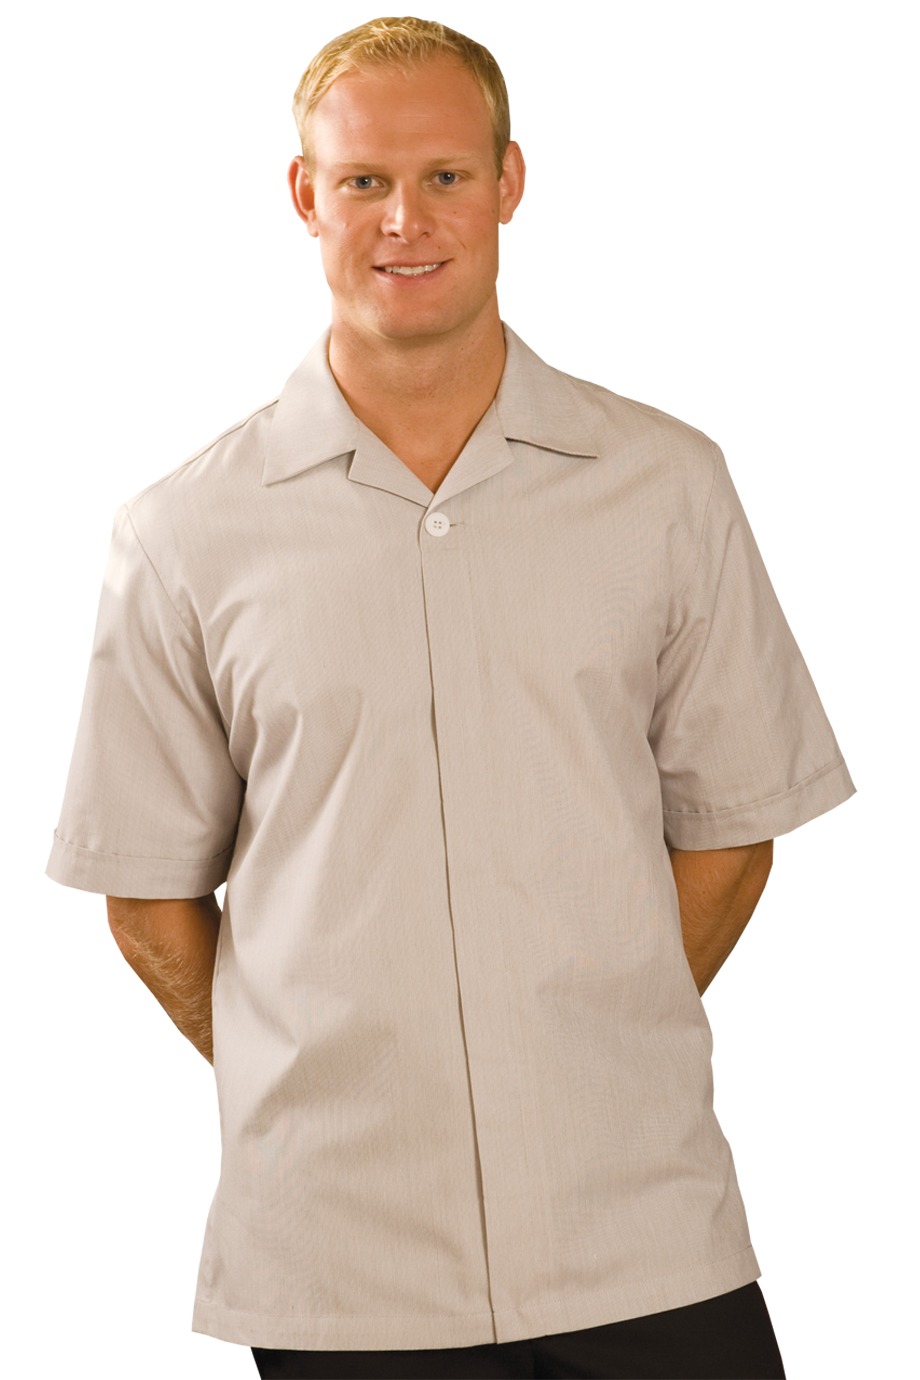 Edwards Garment 4287 - Men's Pincord Tunic $20.67 - Work Shirts